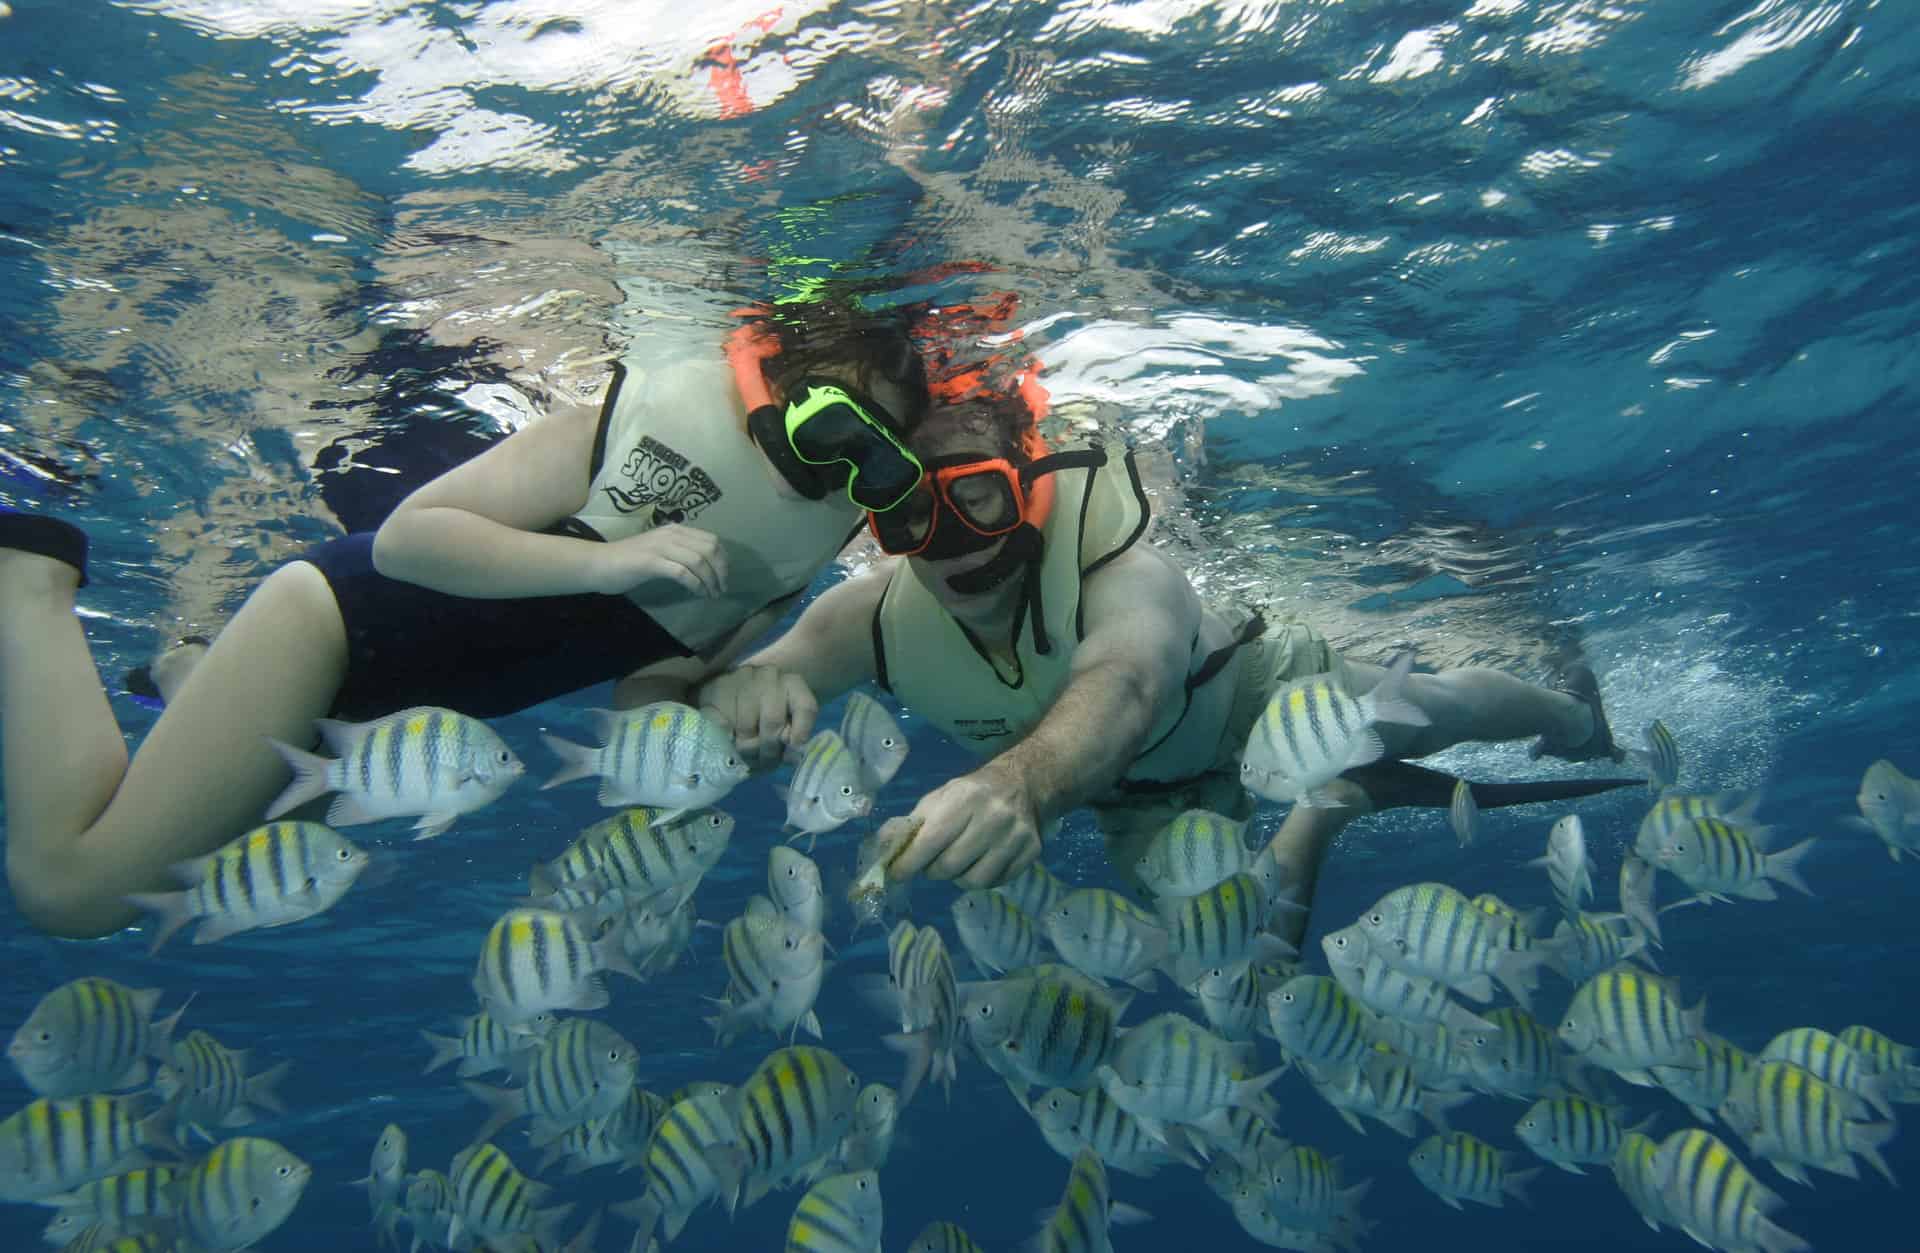 nassau-snorkeling-adventure-sealife - Jamaica Cruise Excursions